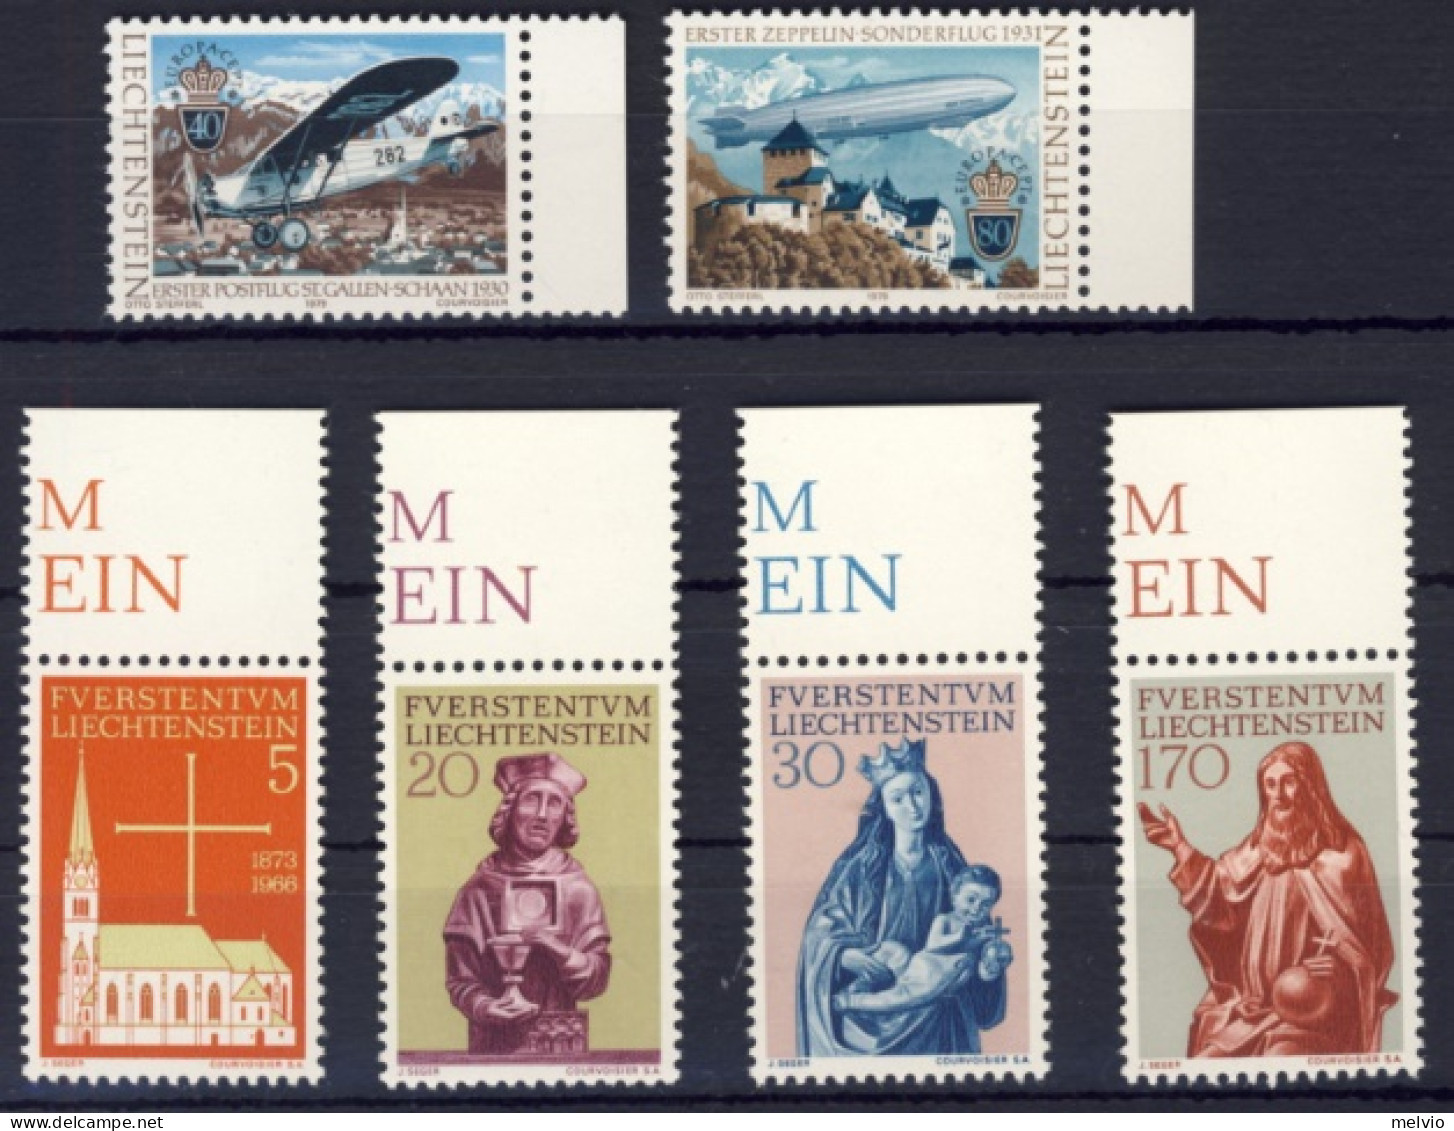 1966/9-Liechtenstein (MNH=**) 2 Serie 6 Valori Chiesa Parrocchiale Di Vaduz,Euro - Unused Stamps